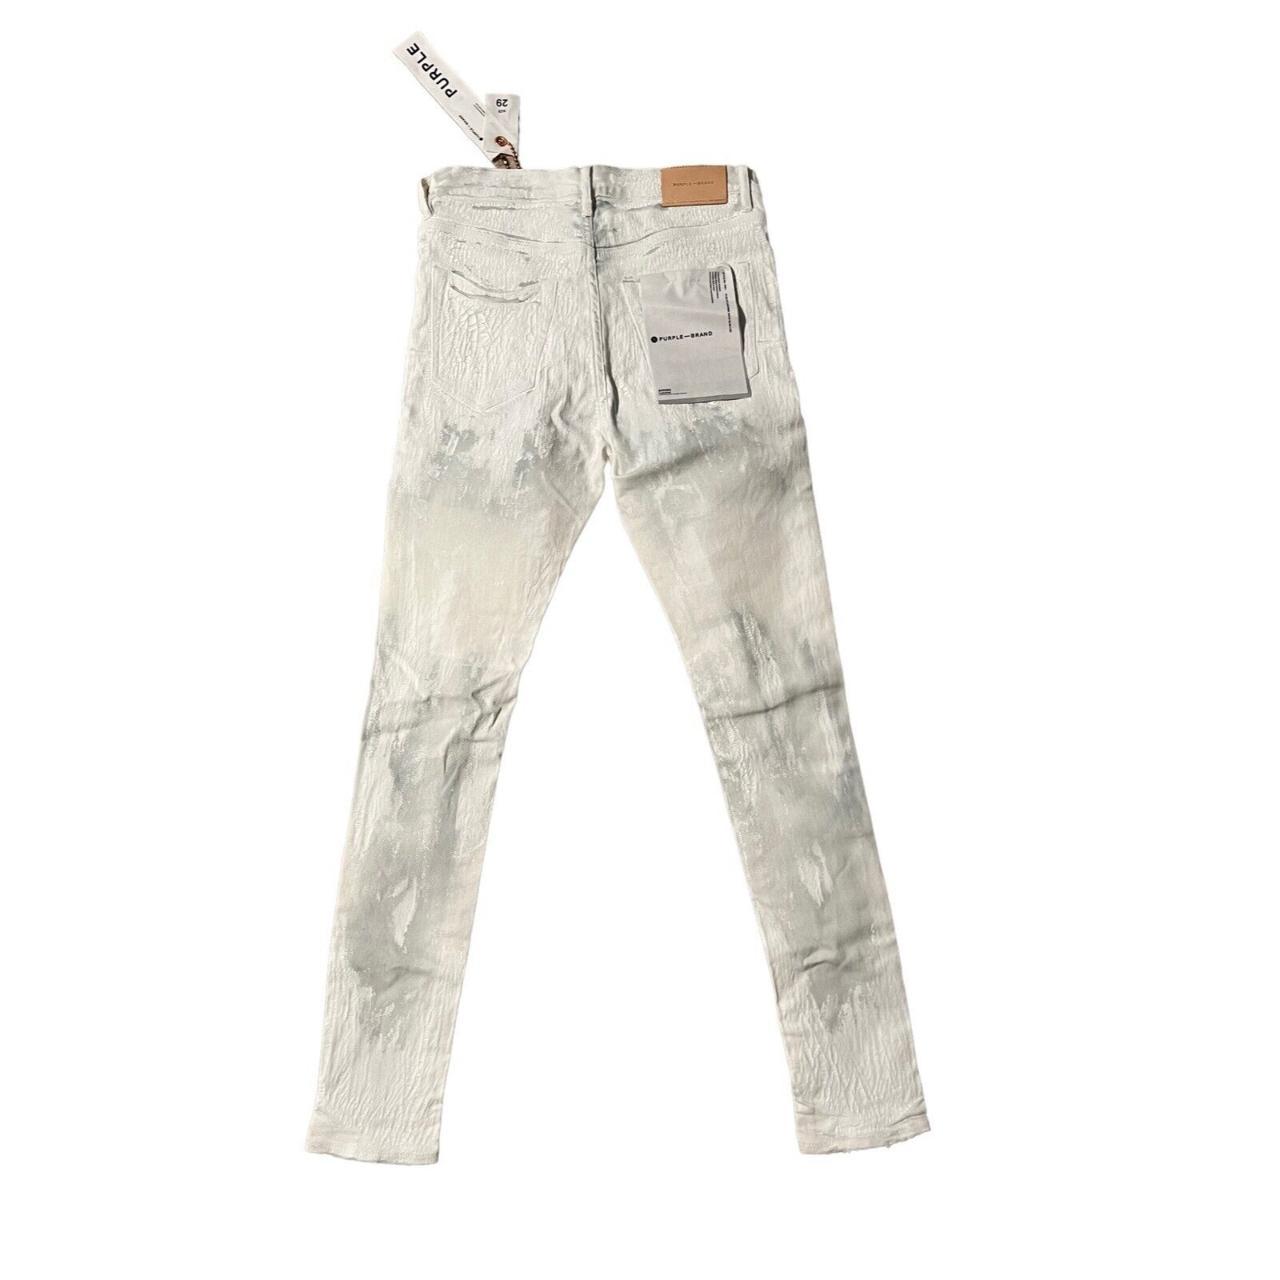 JBrand 31x30 Straight Fit Mid Rise #Jeans #Pants - Depop